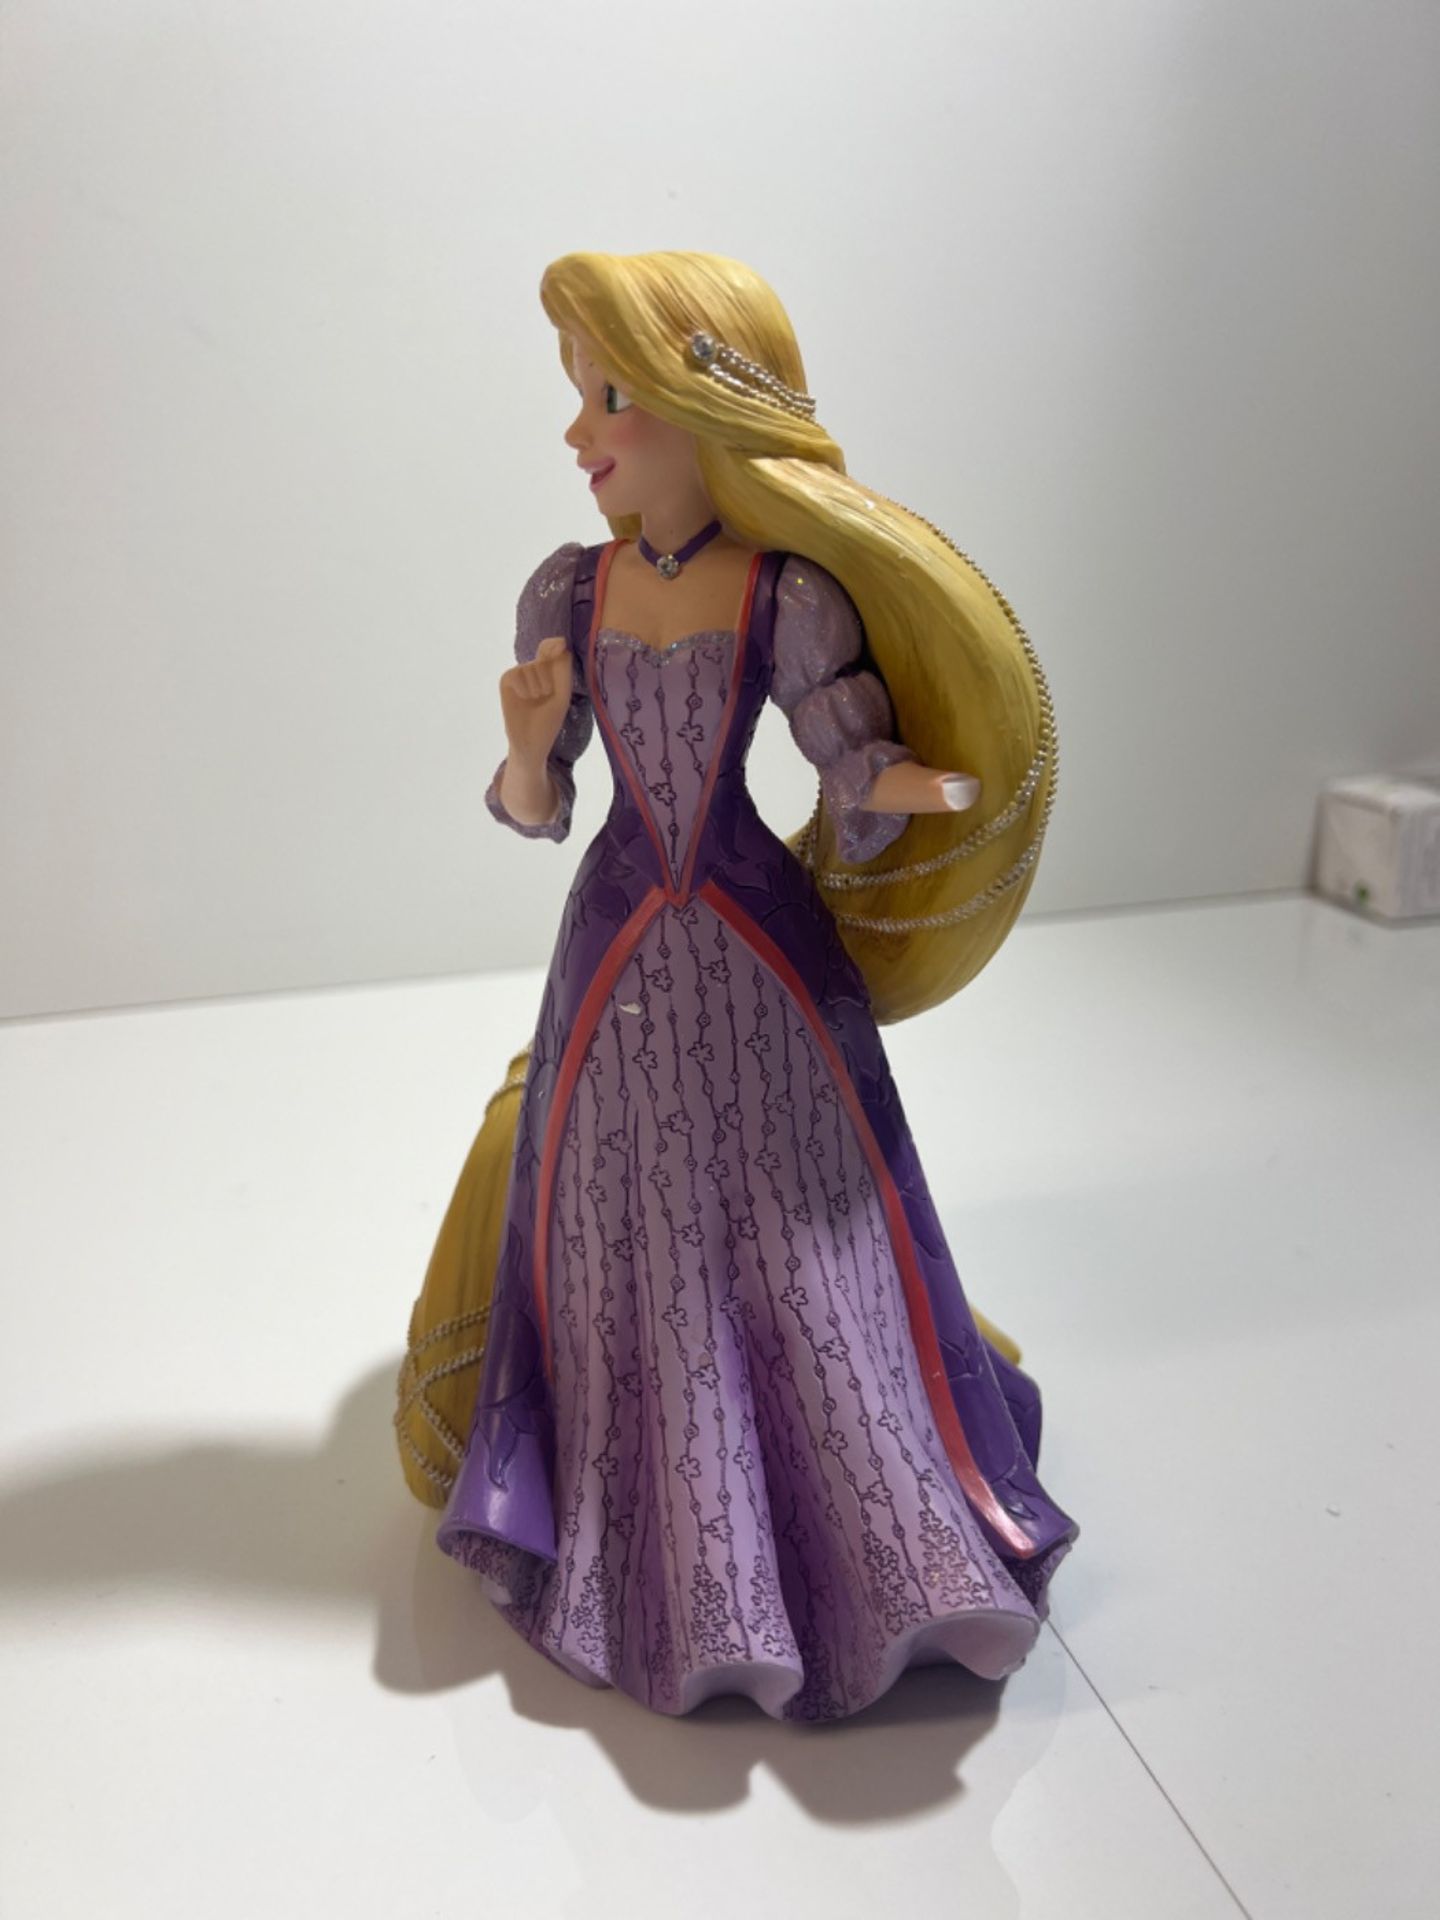 Disney Showcase Rapunzel Figurine - Image 2 of 3